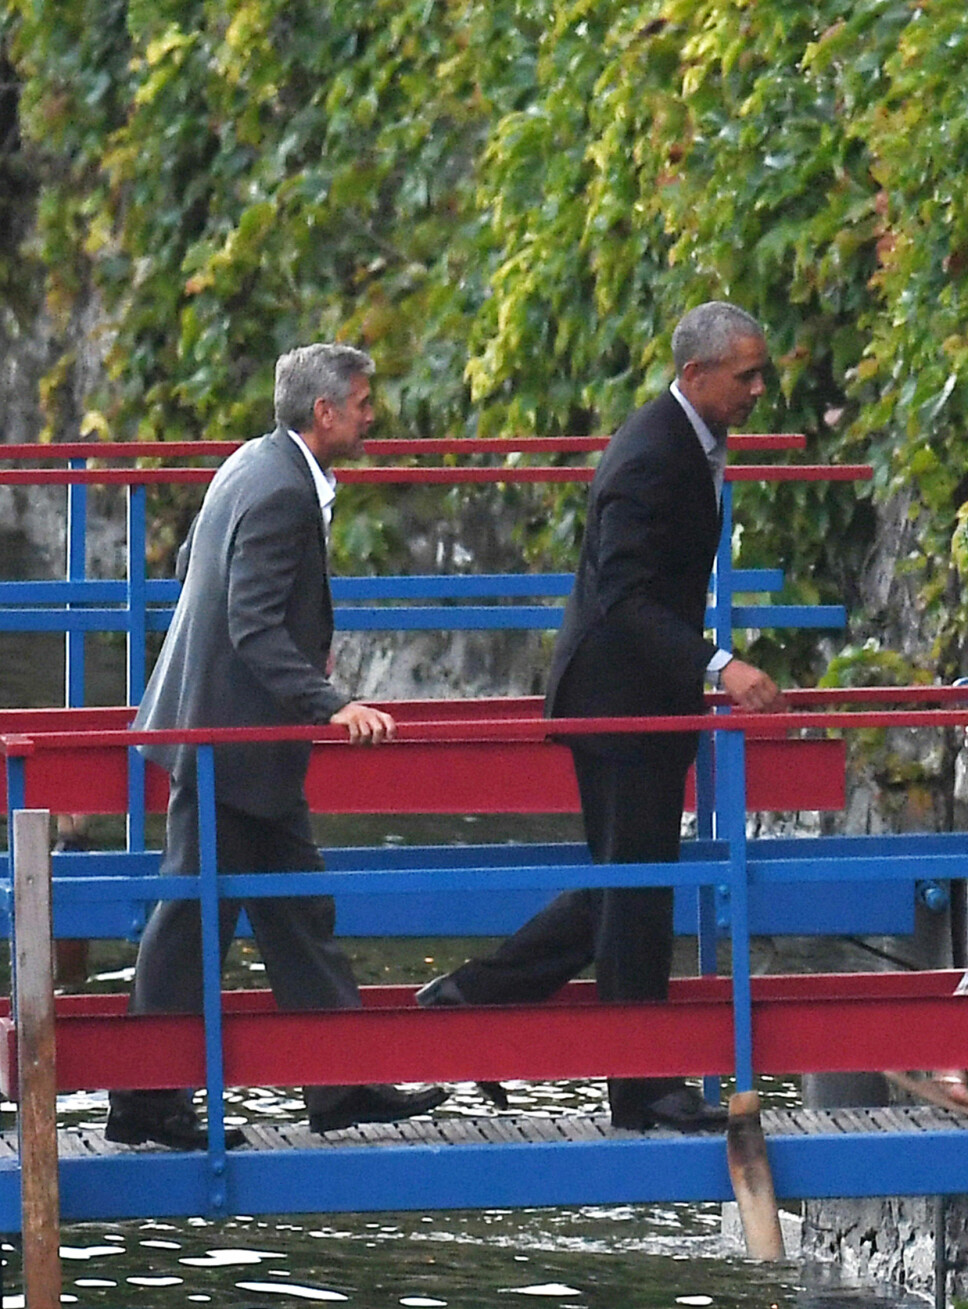 PÅ VEI I LAND: George Clooney og Barack Obama på vei i land ved Lake Como i Italia.